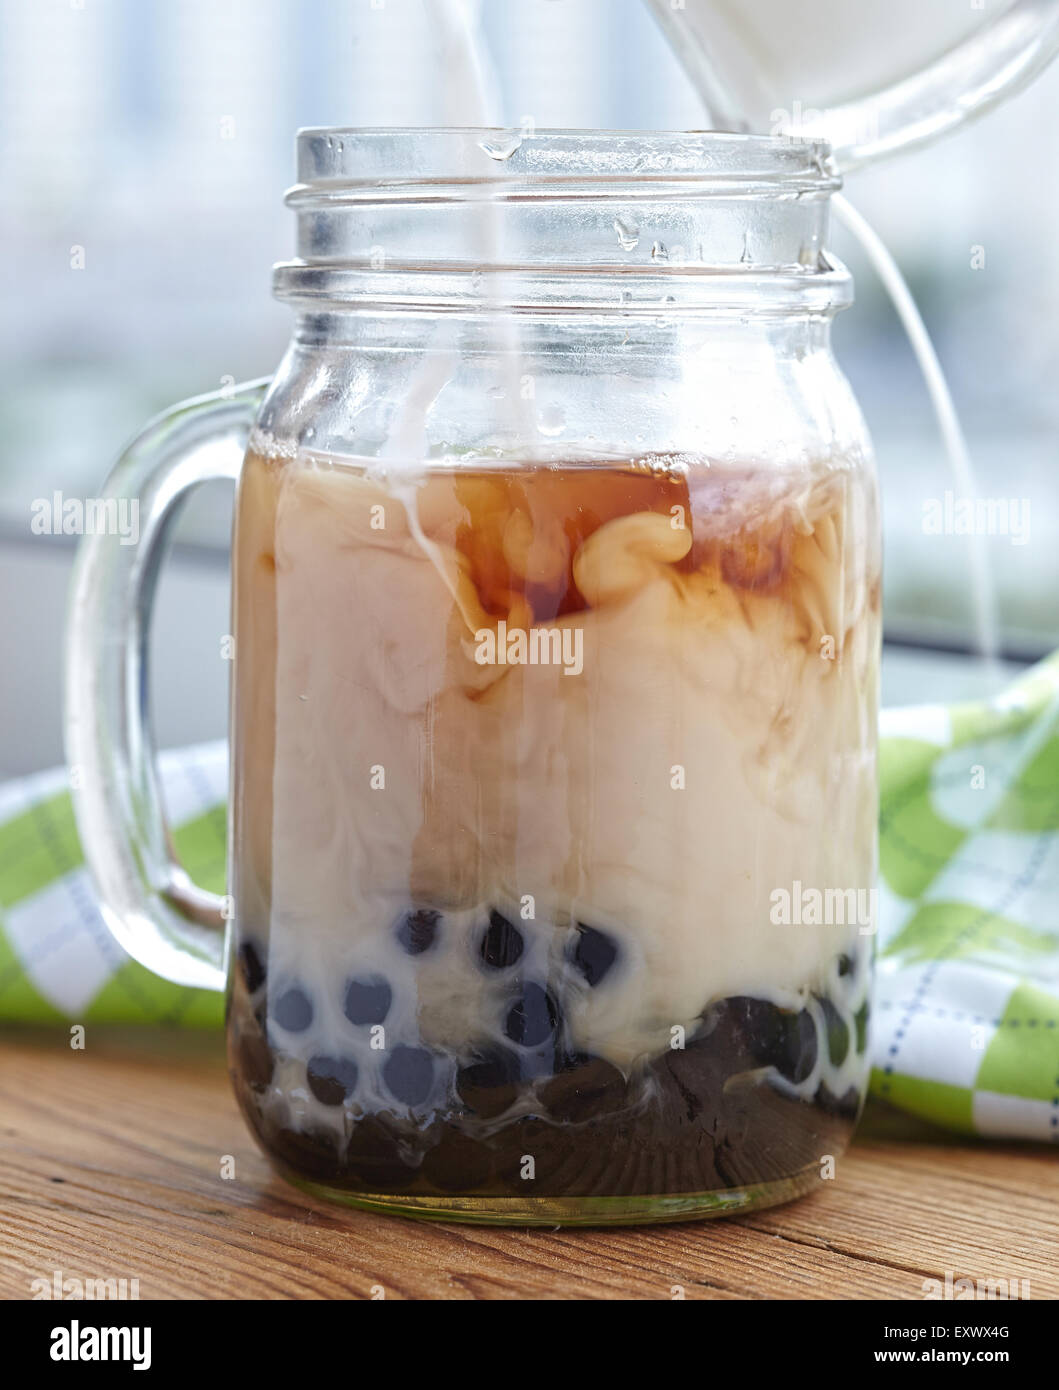 Blase Boba Tee mit Milch und Tapioka Perlen Stockfoto